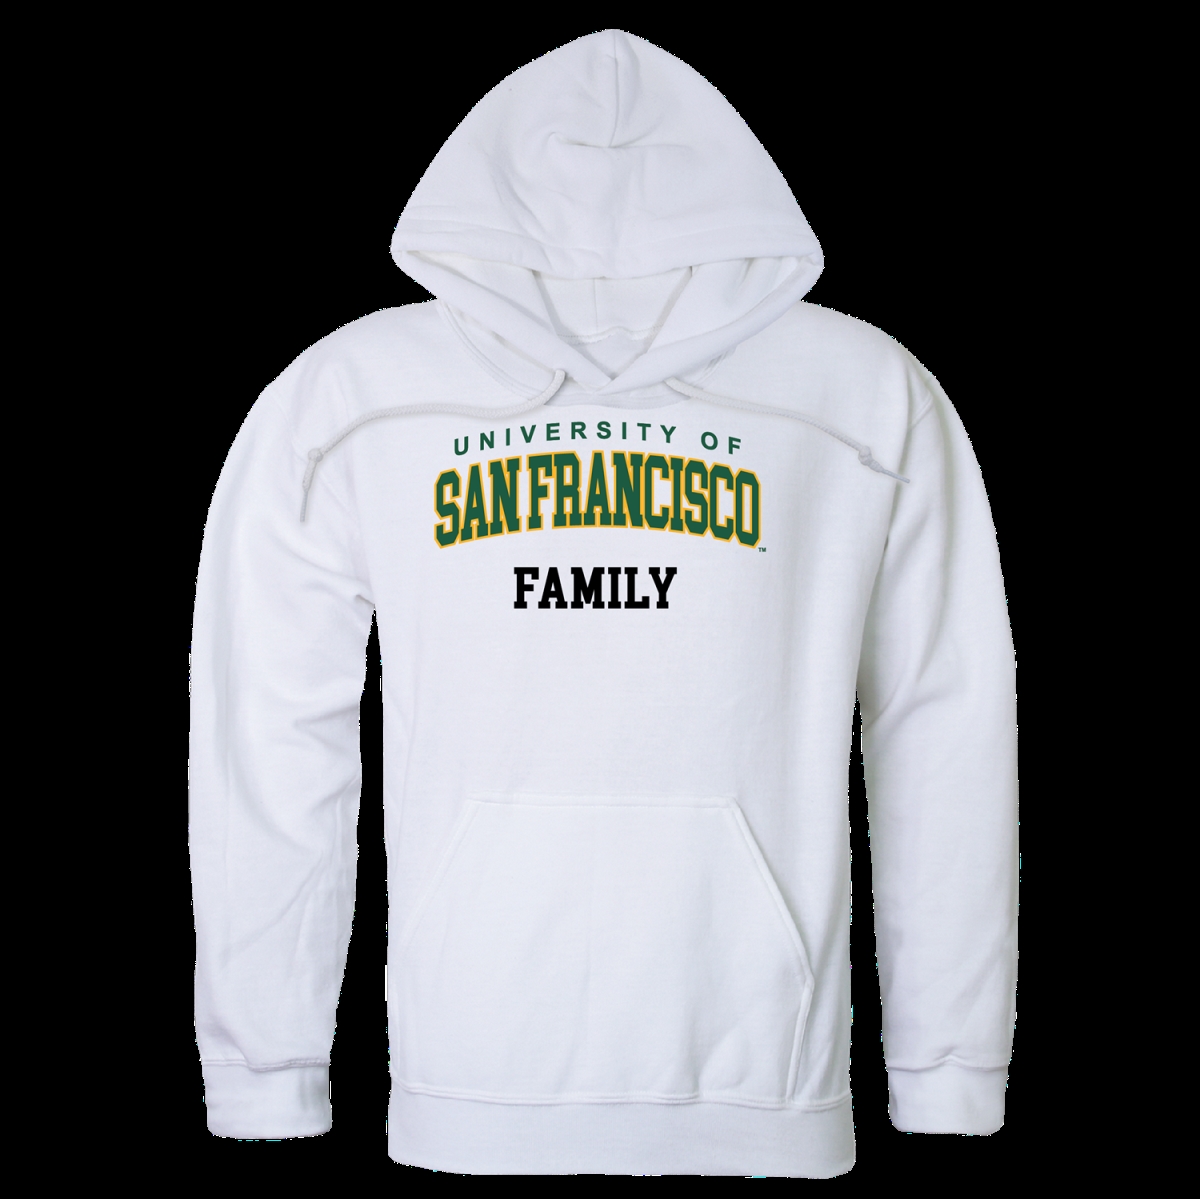 573-377-WHT-03 San Francisco State University Dons Family Hoodie, White - Large -  W Republic